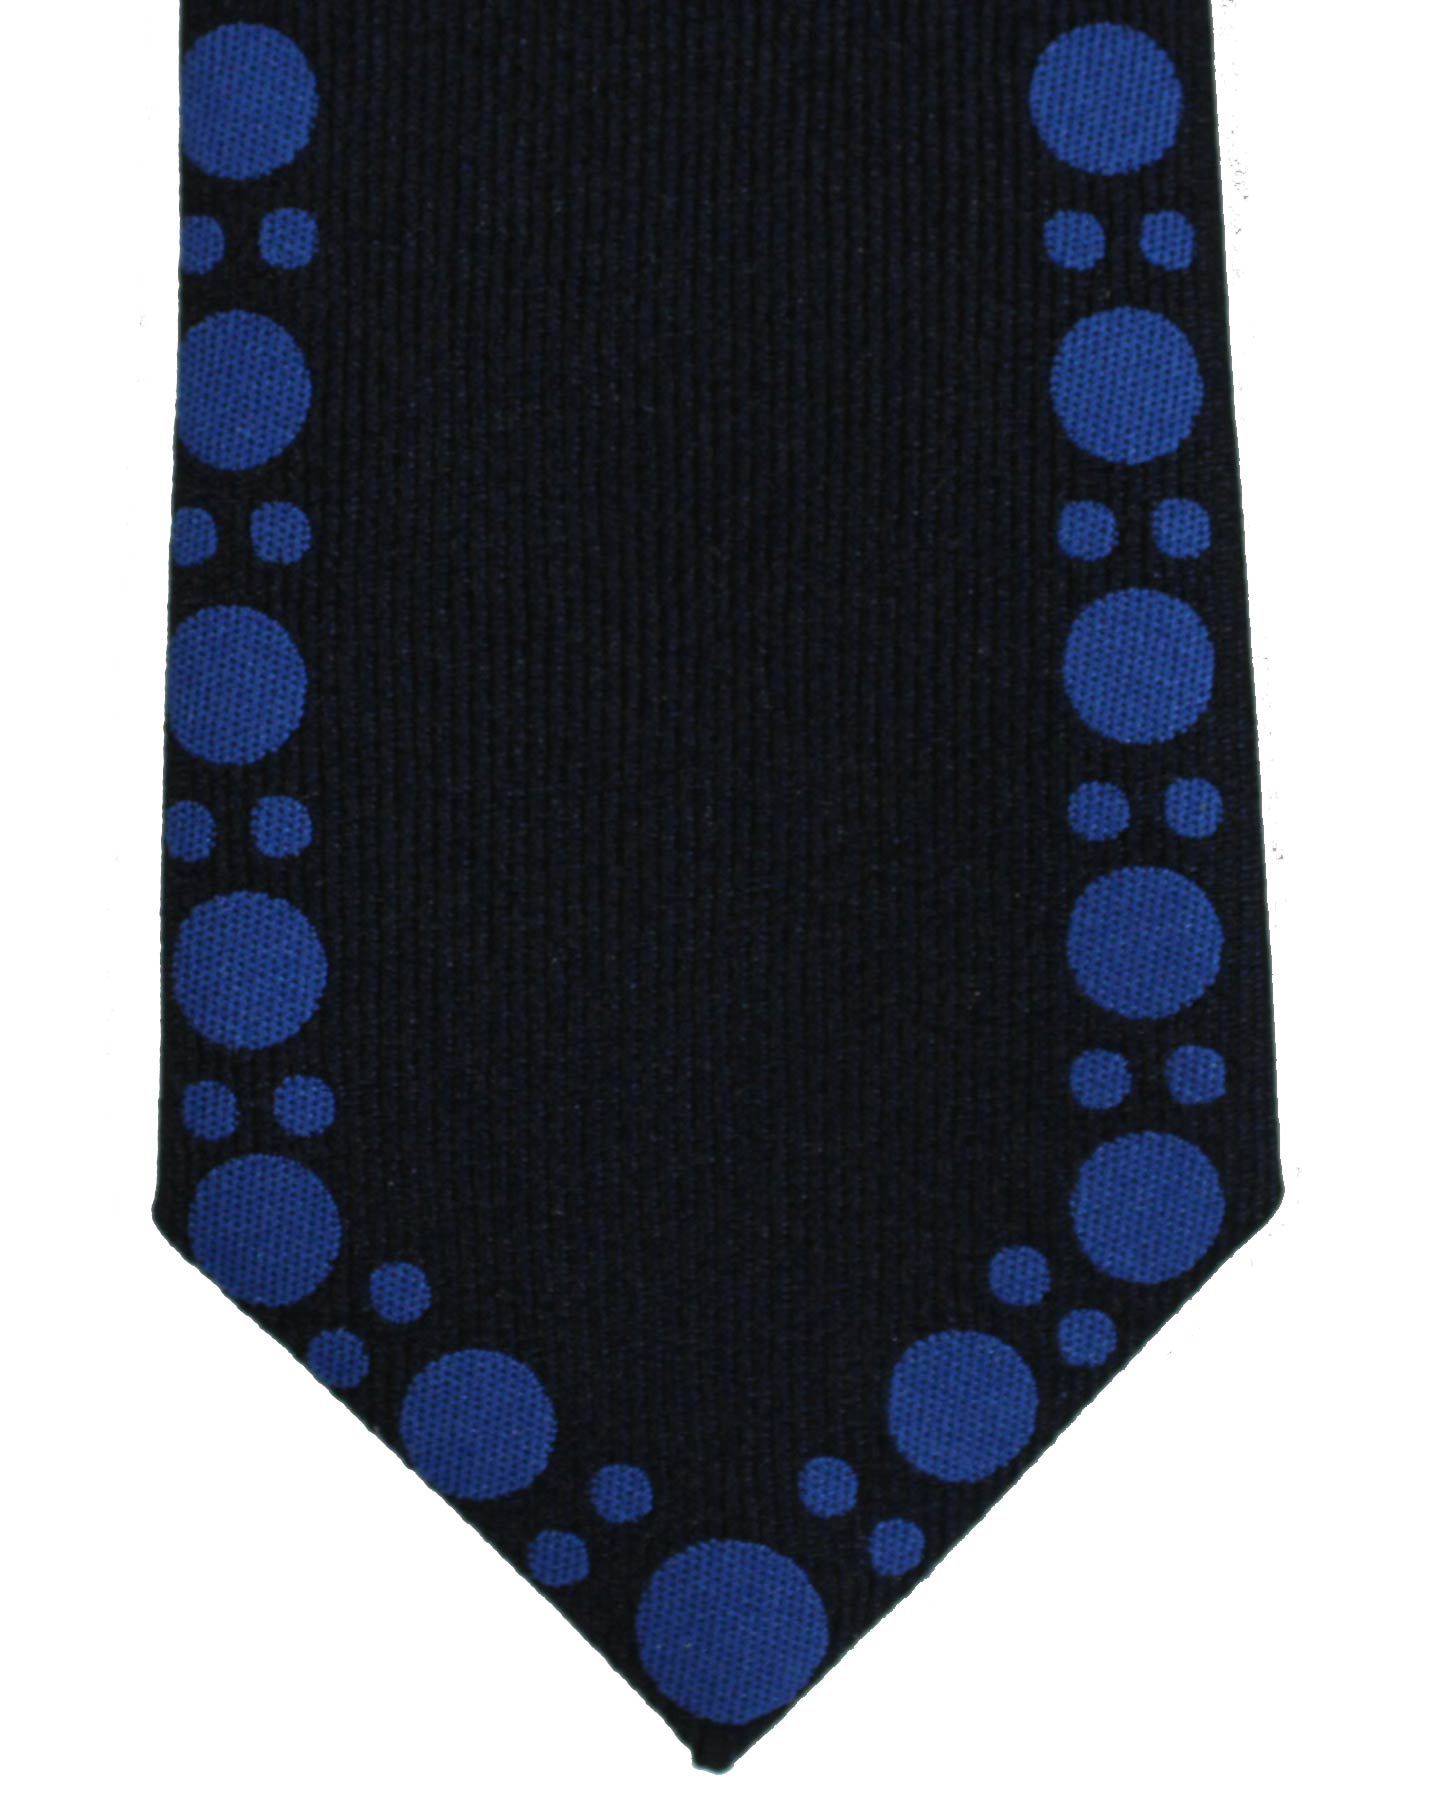 Z Zegna Tie Royal Blue Dots Design - Narrow Necktie